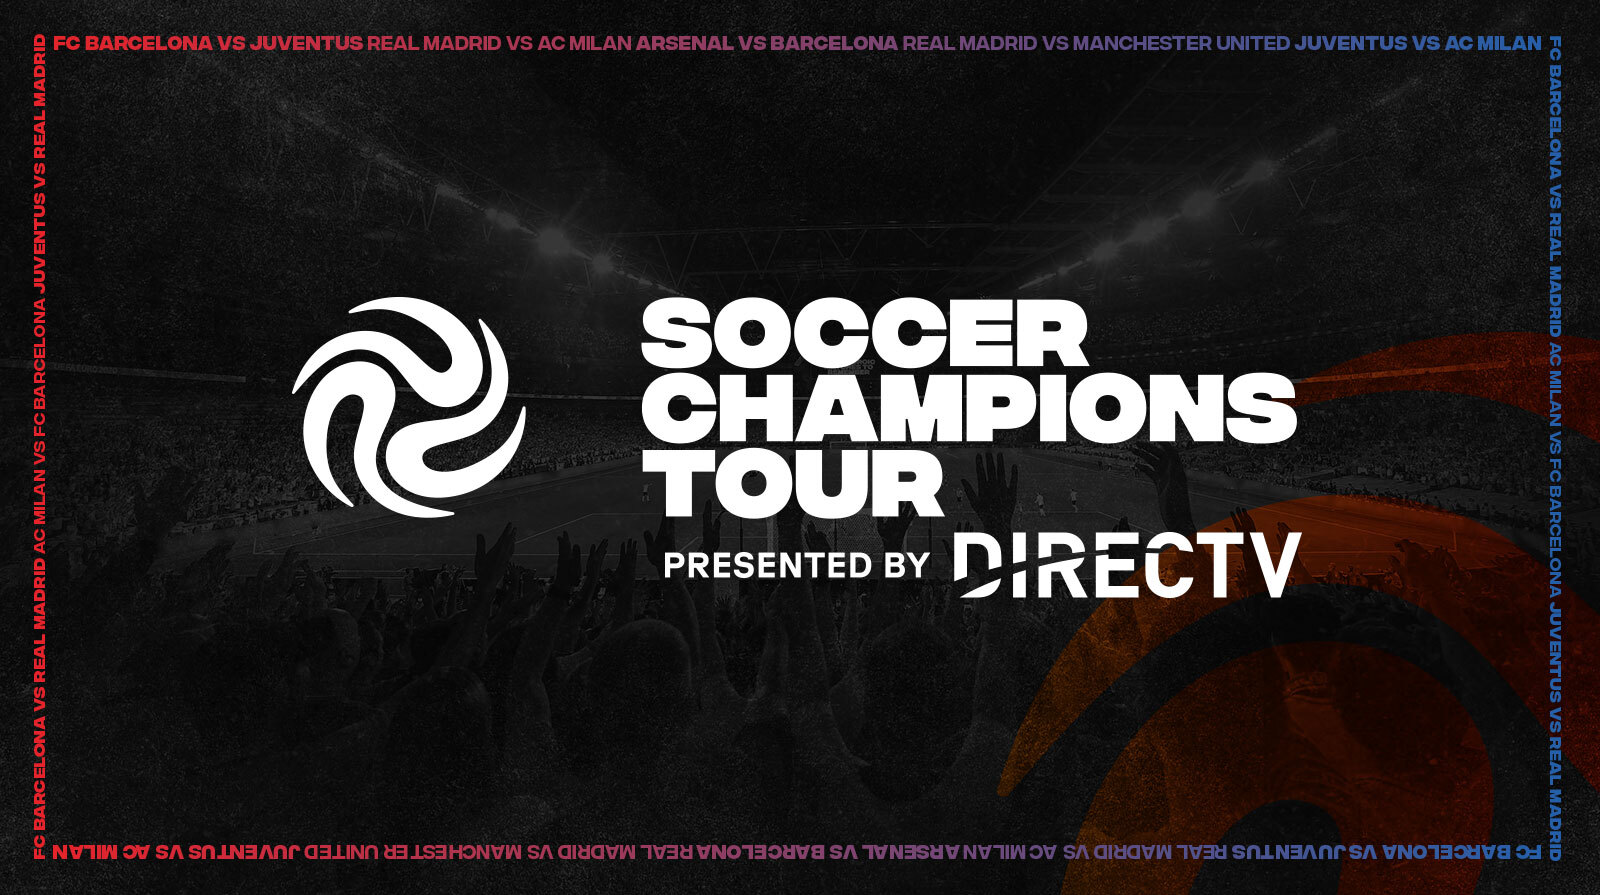 Soccer Champions Tour Announces DIRECTV as Presenting Sponsor